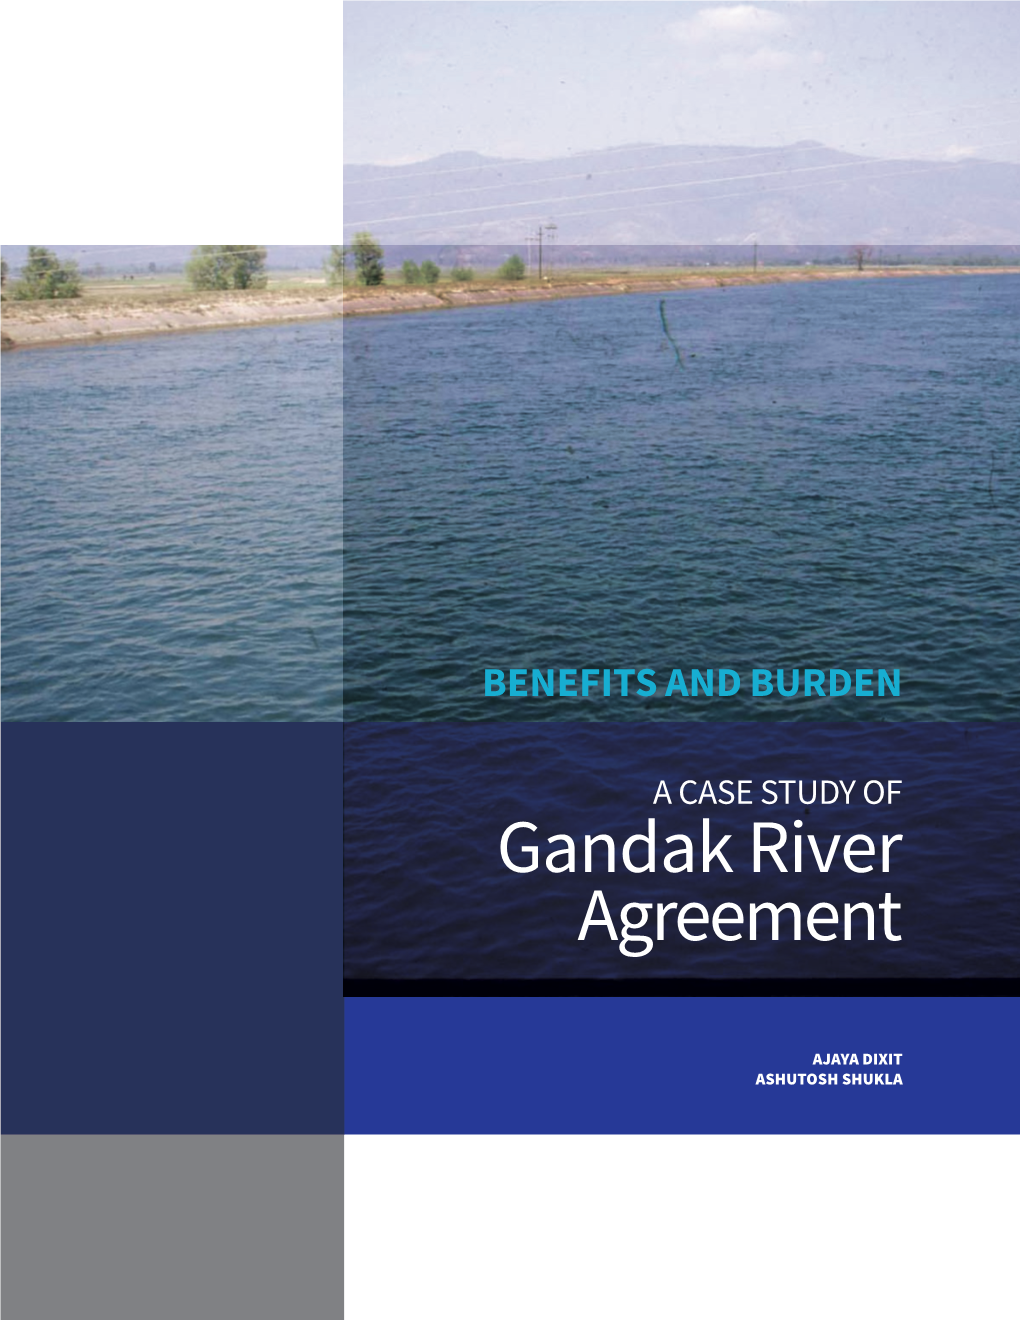 Gandak River Agreement